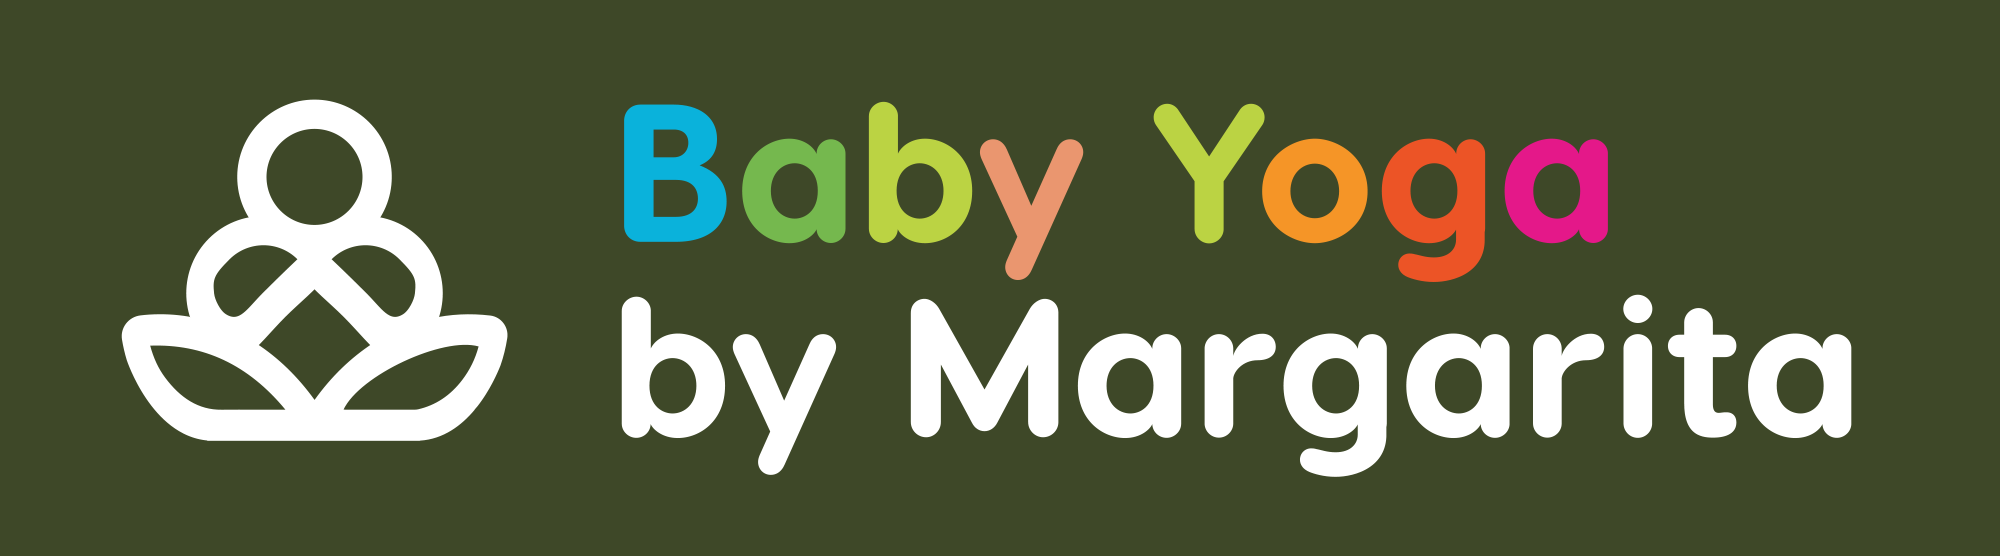 Baby Yoga with Margarita Anderson logo